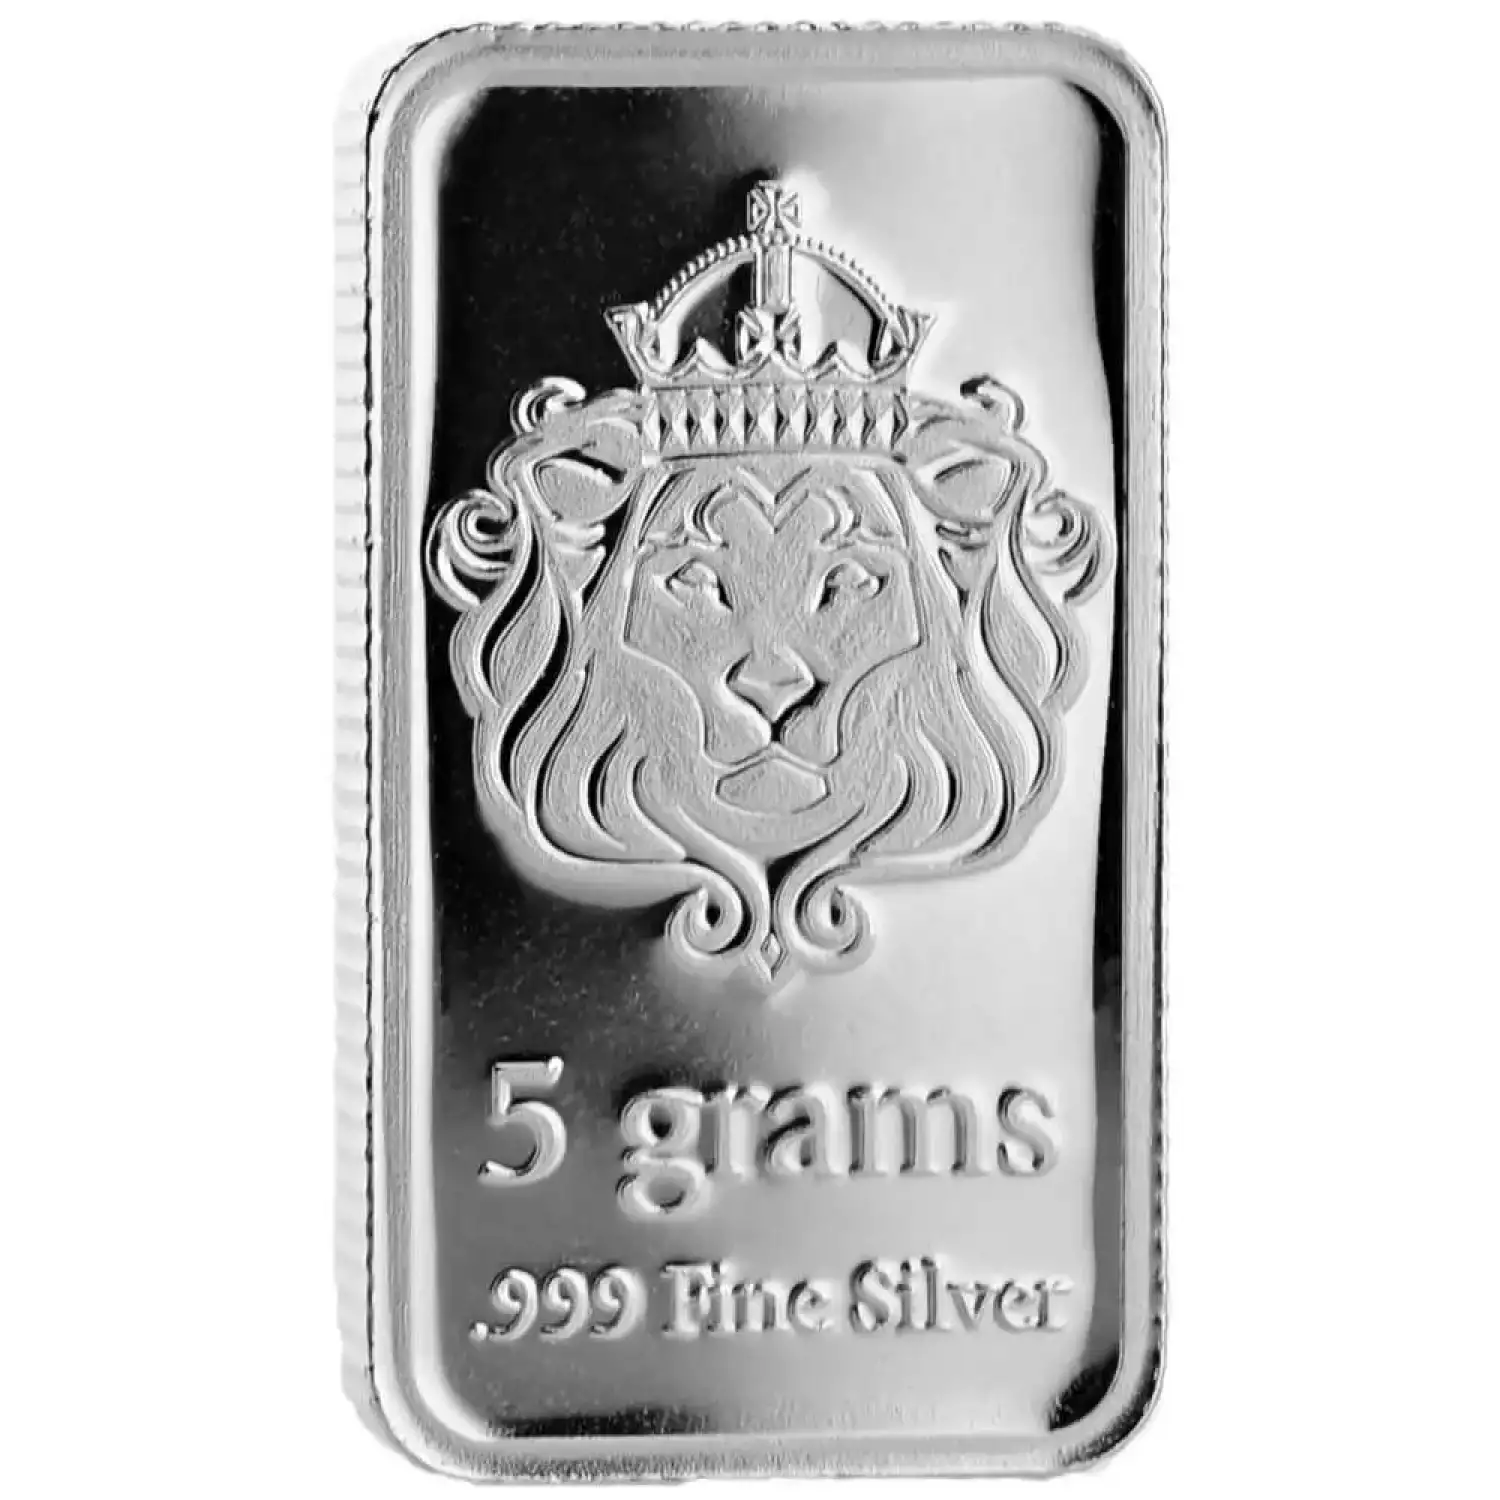 Scottsdale Mint 5 Gram Silver Bar